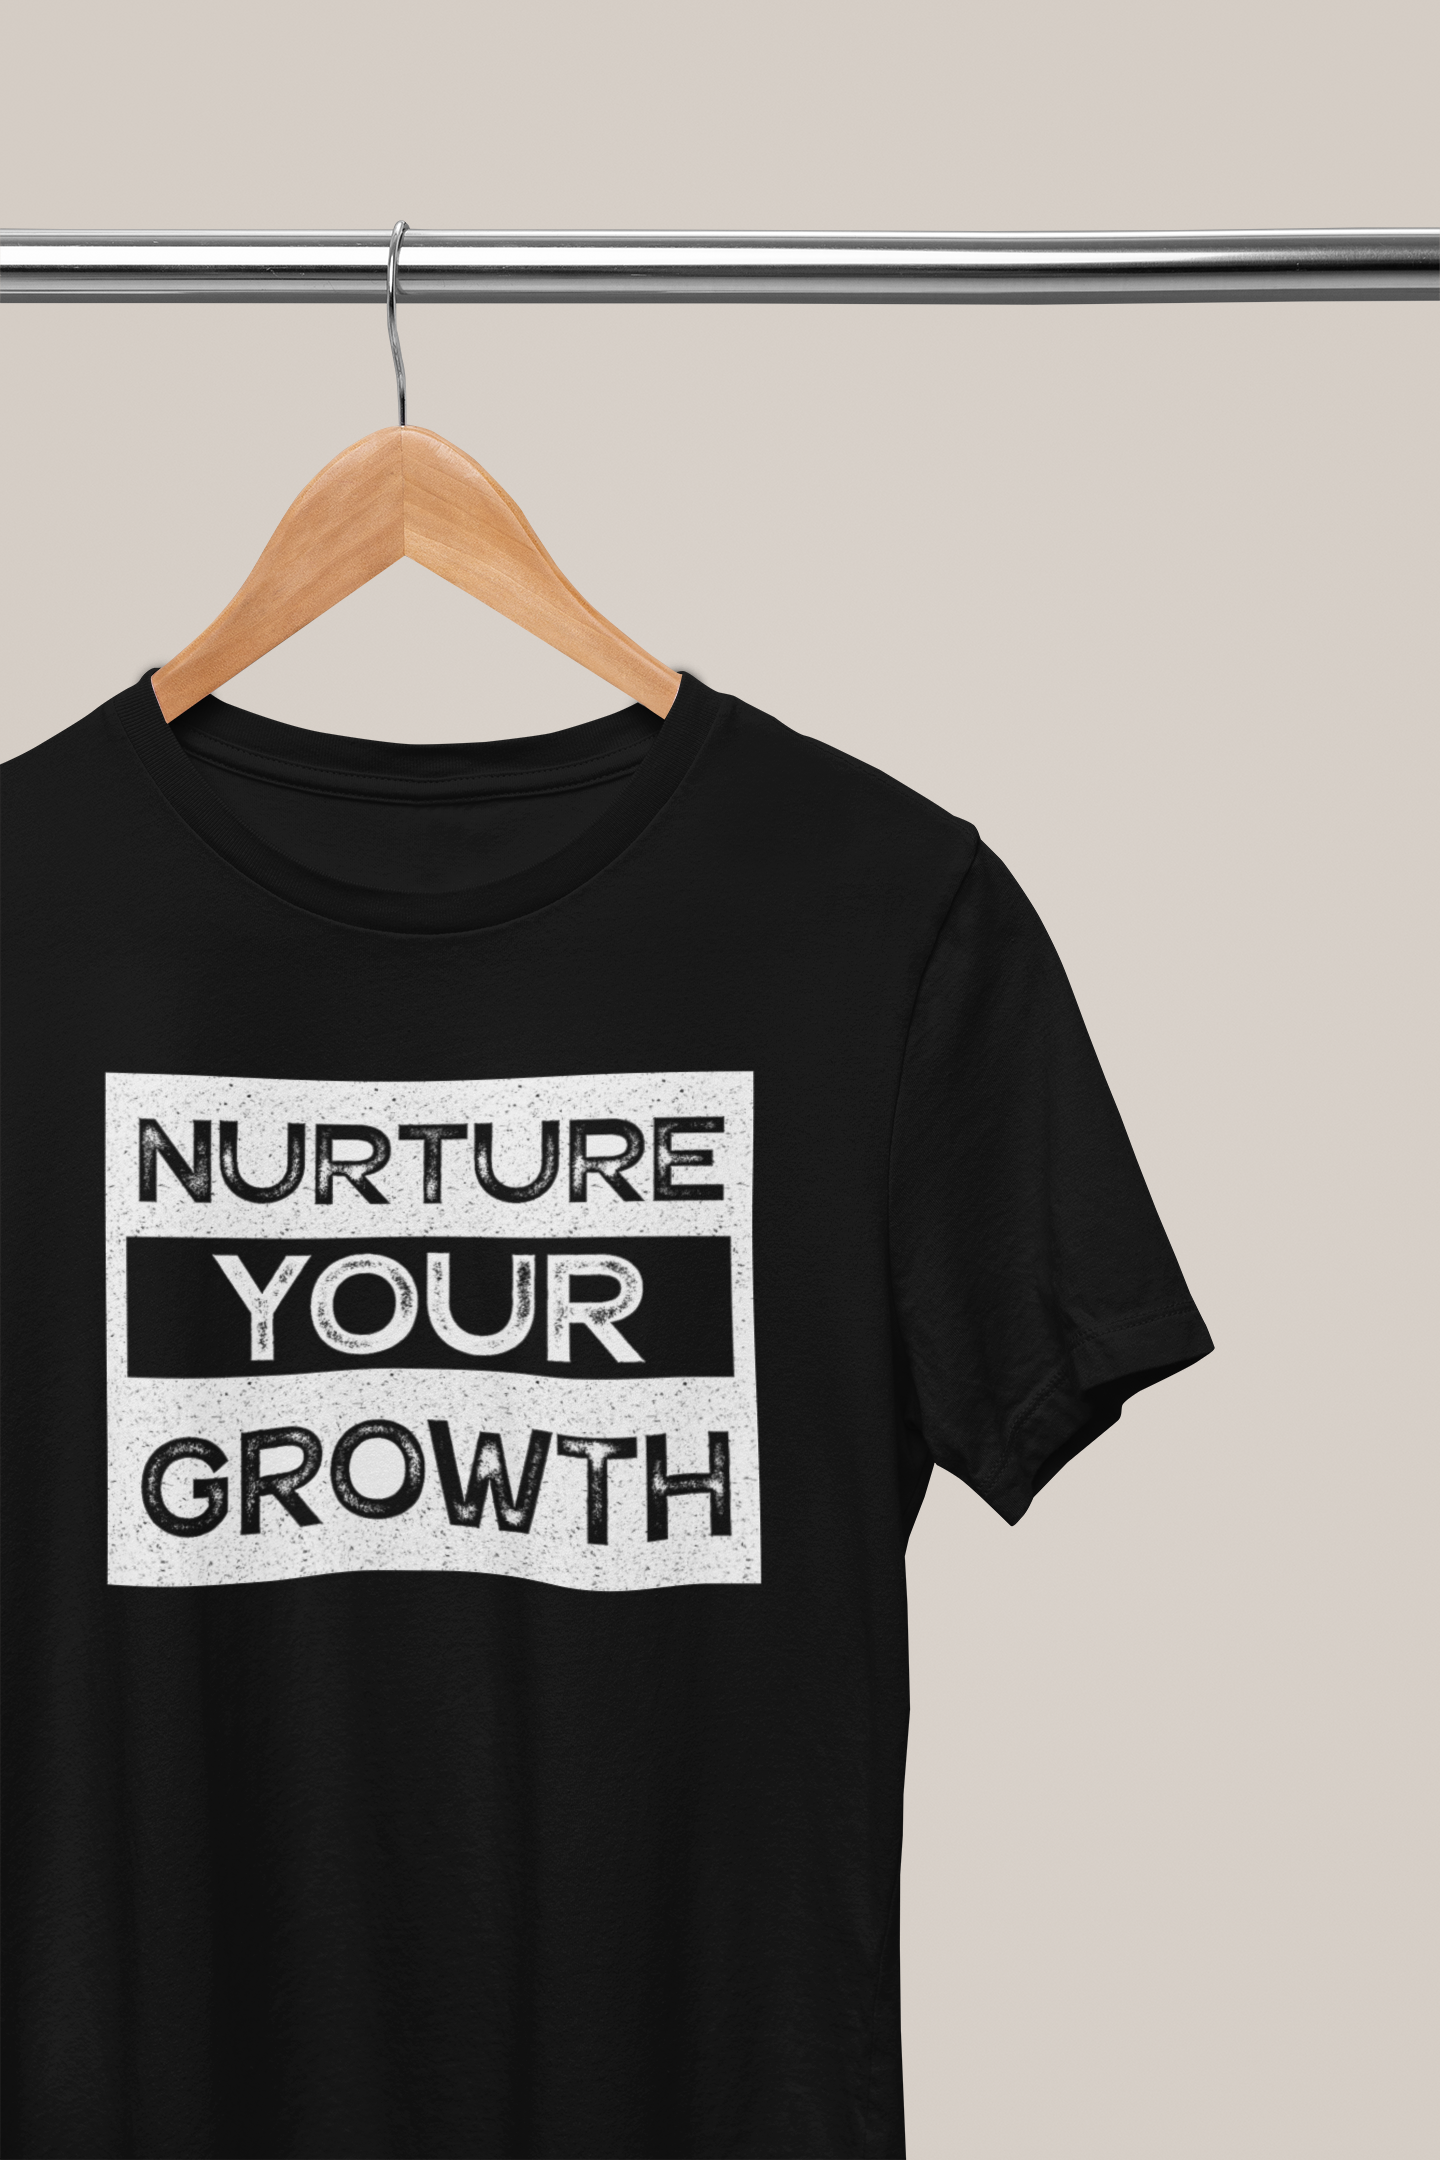 Nurture Your Growth, Hoodies, Sweatshirts, Tees, and Mugs